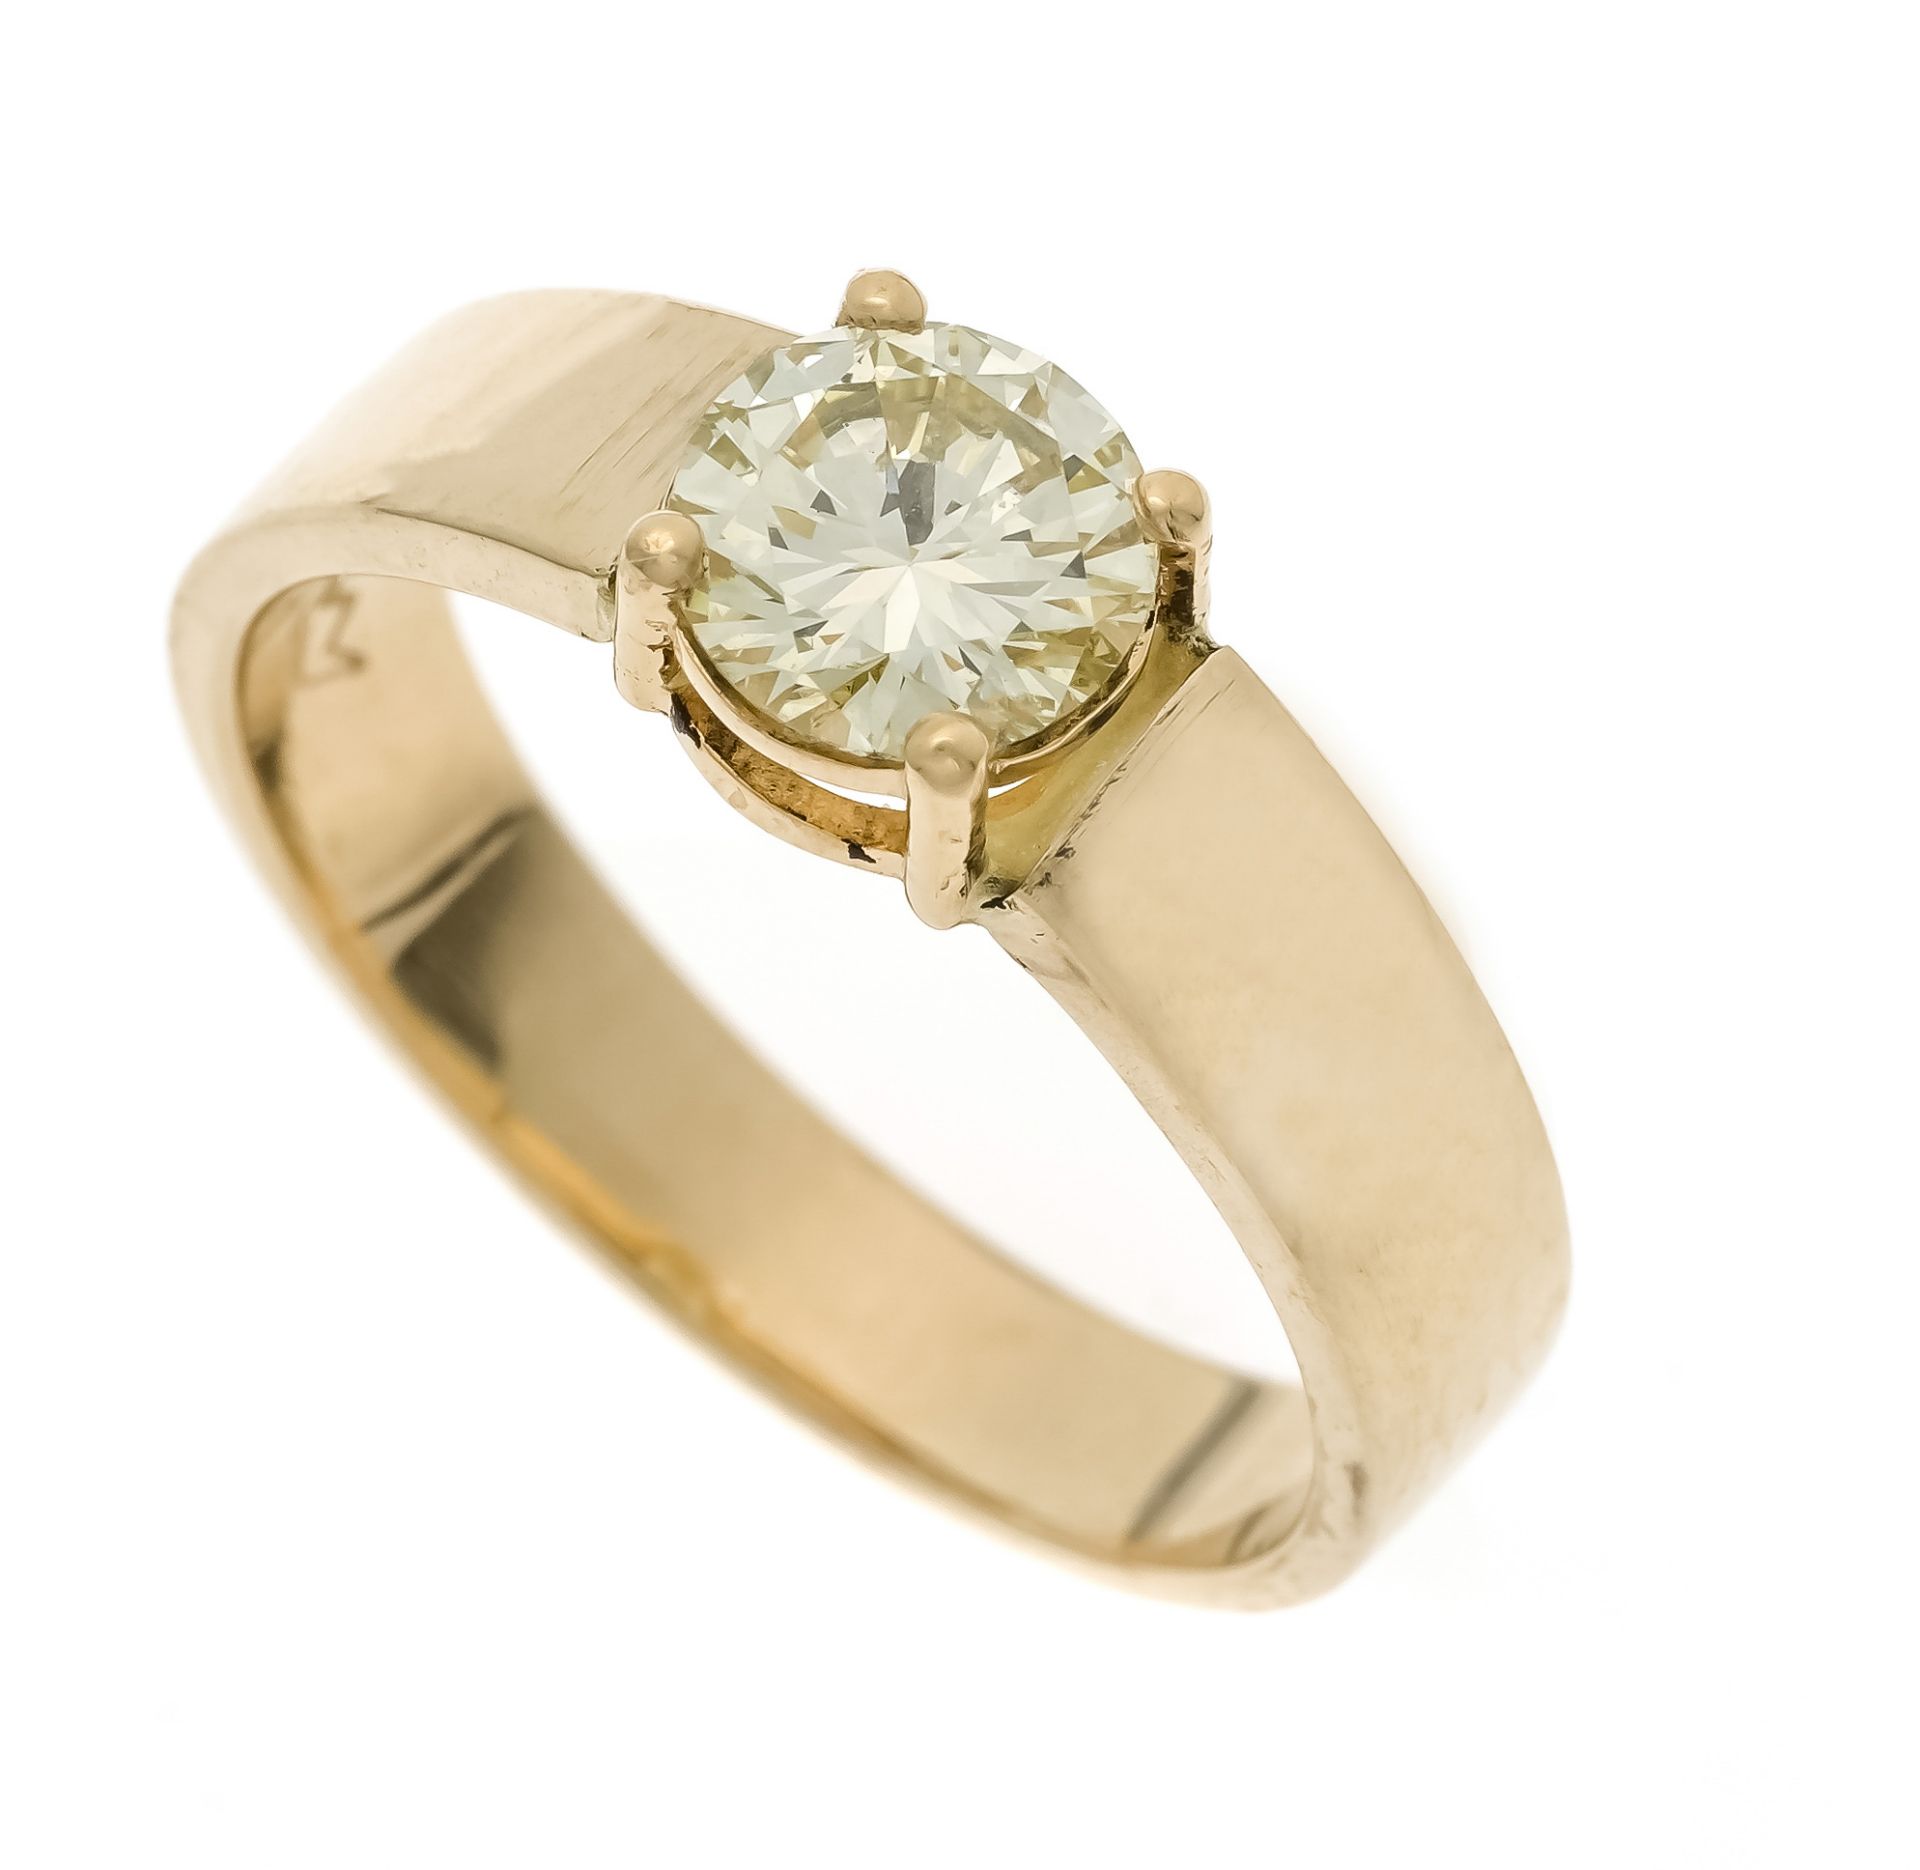 Light yellow brilliant-cut diamond ring GG 585/000 with one brilliant-cut diamond 0.90 ct light